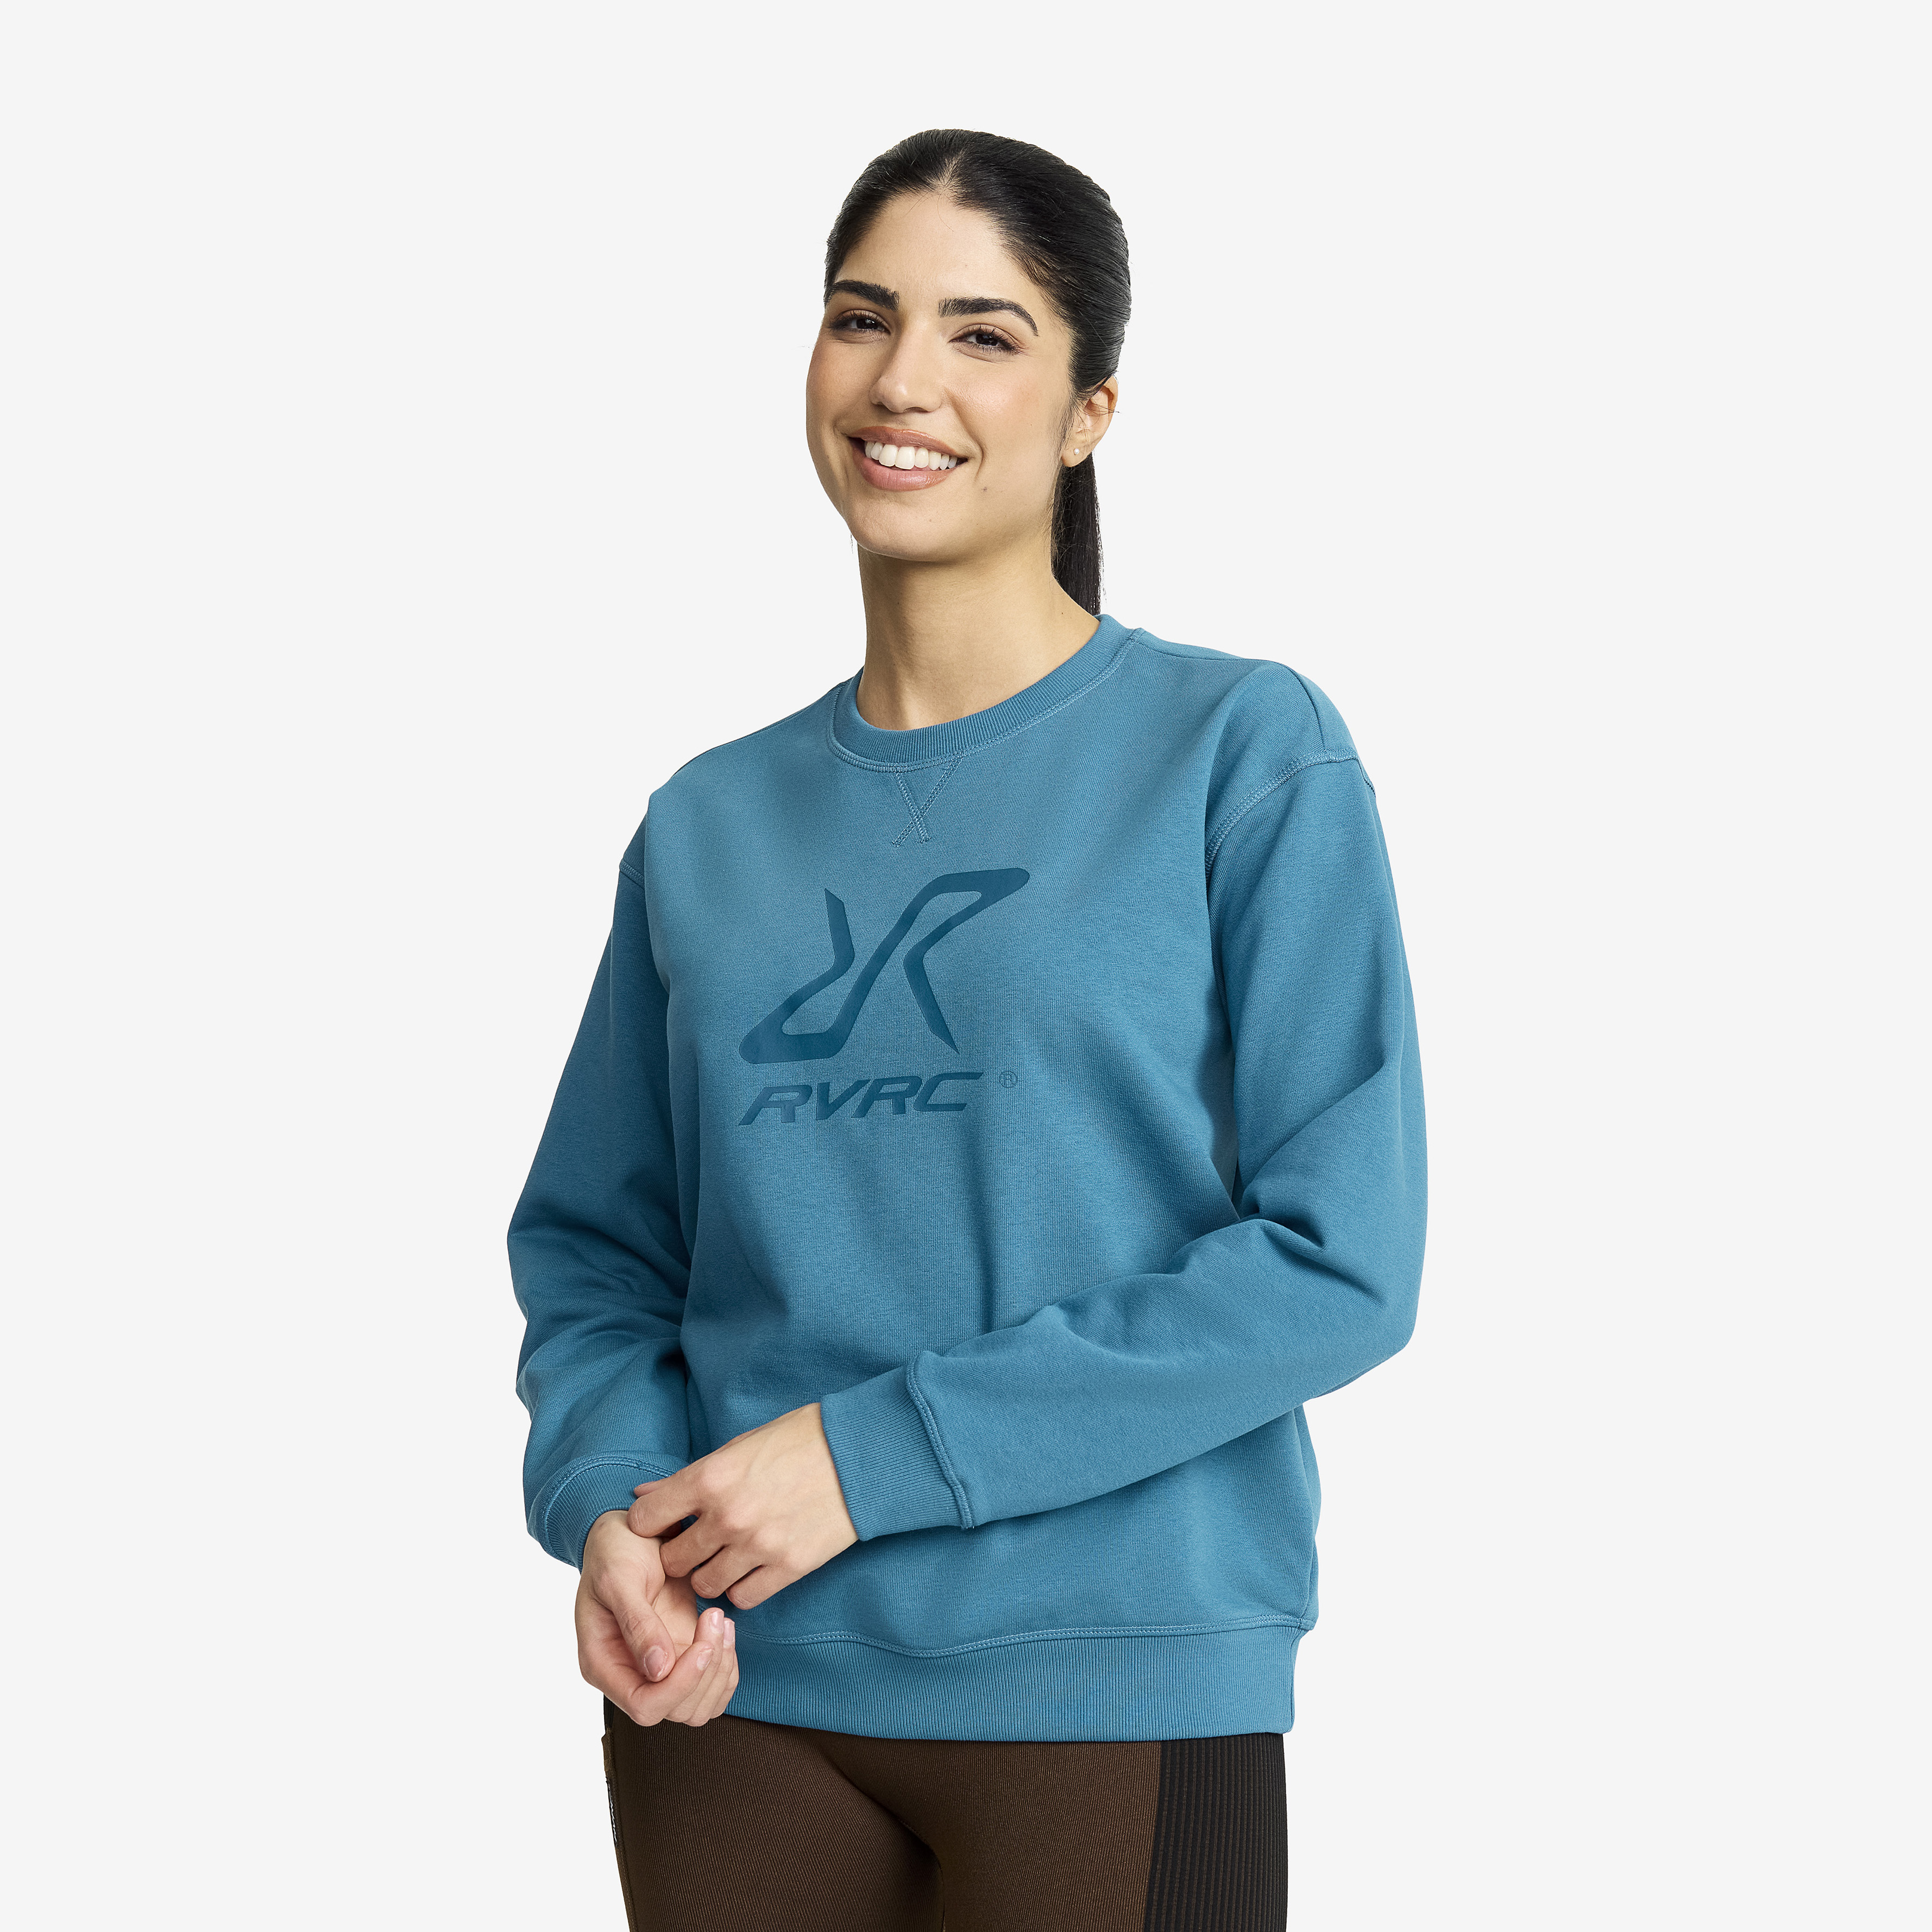 RVRC Sweatshirt Saxony Blue Femme